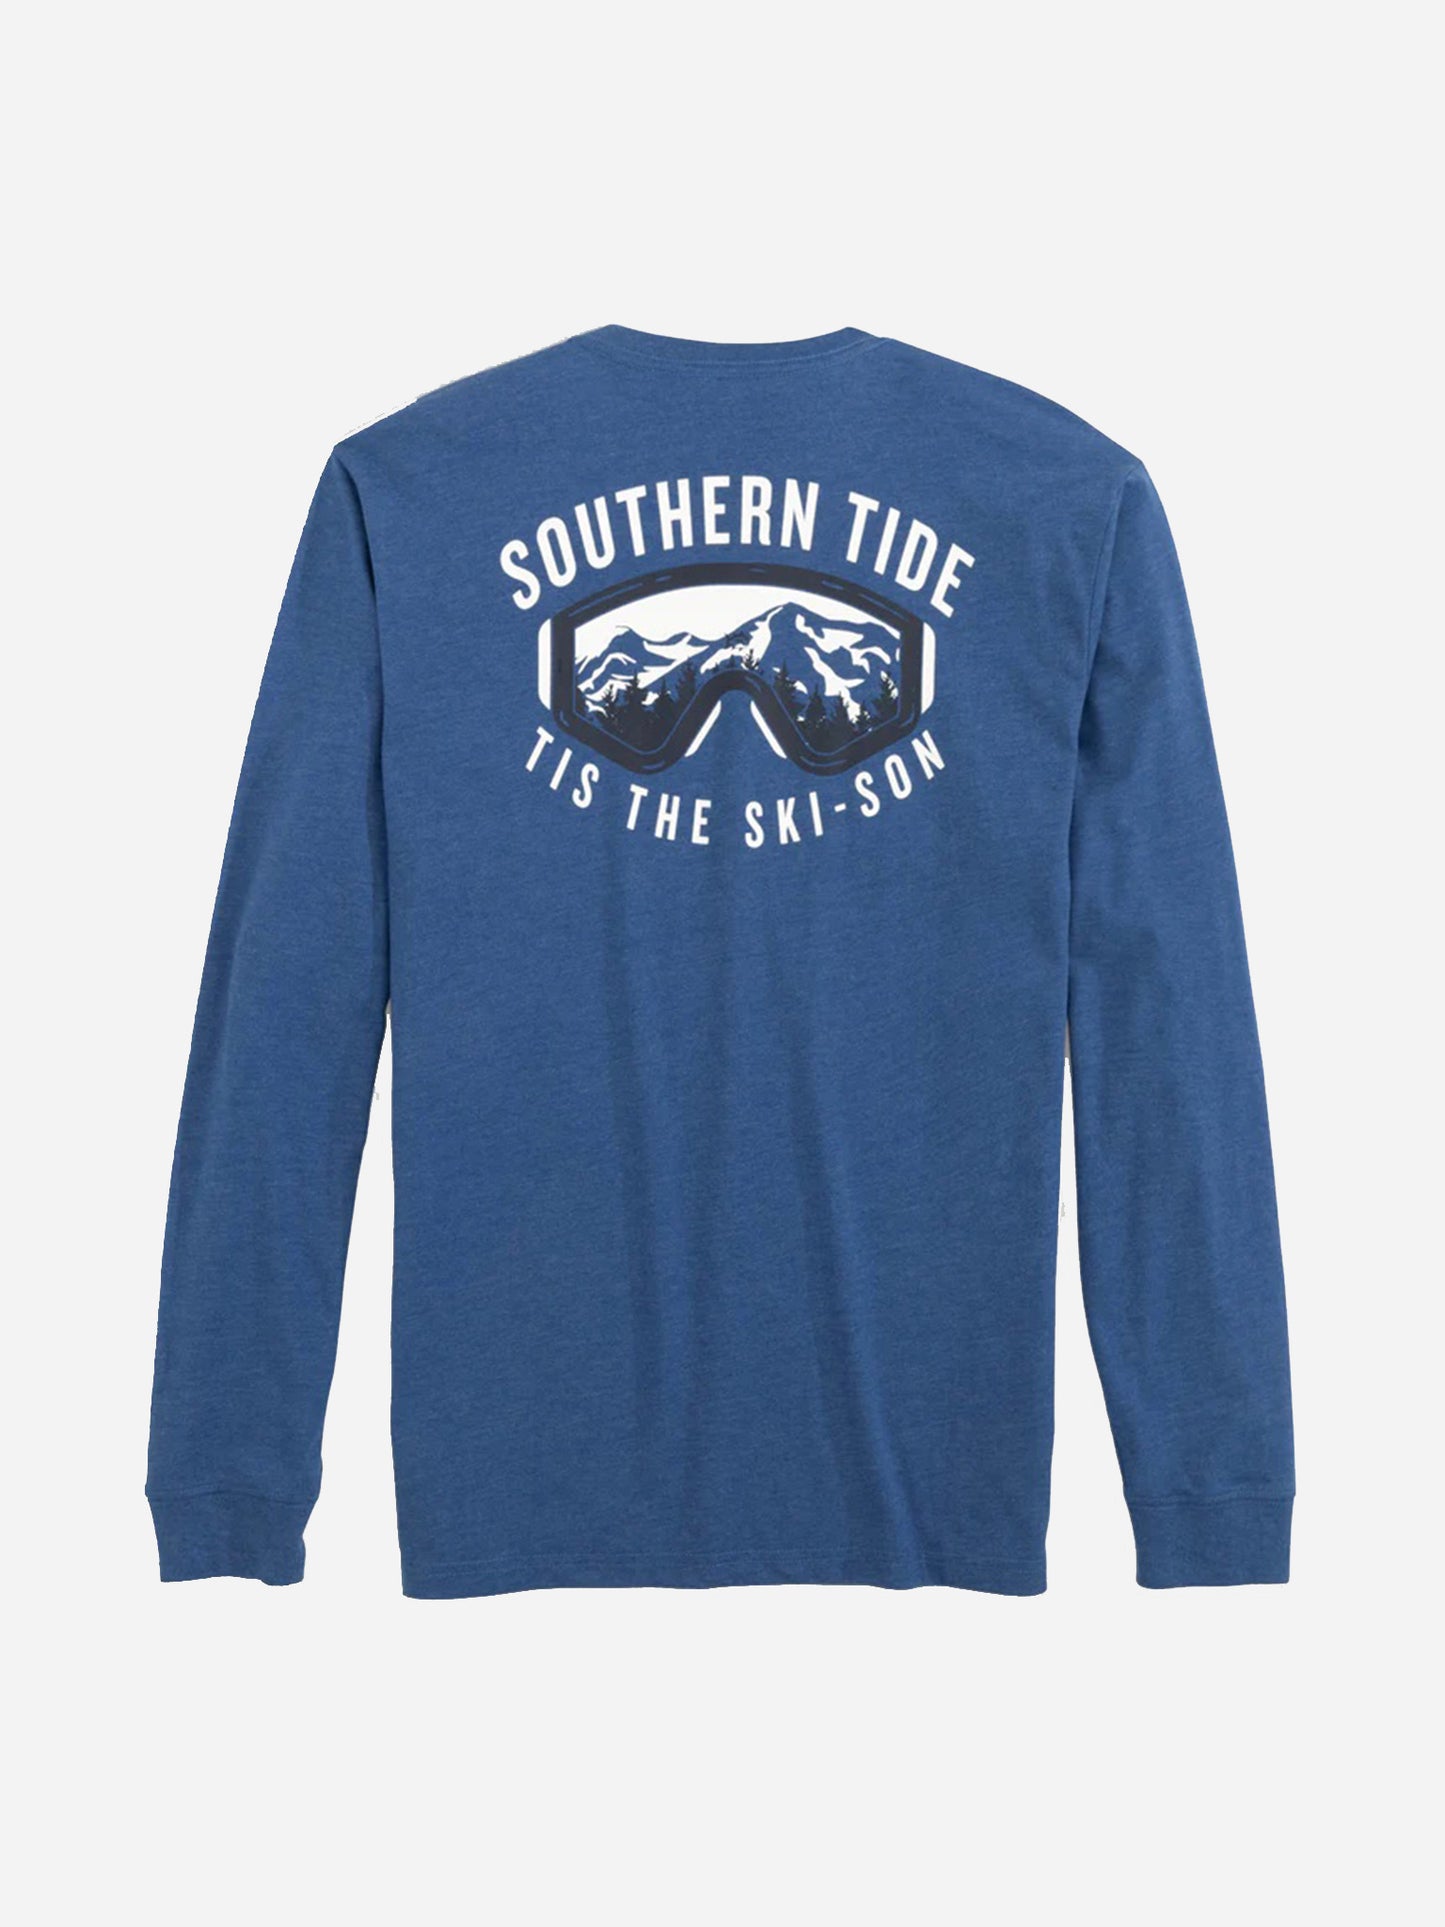 Southern Tide Men's Heather Tis The Ski-Son Long Sleeve T-Shirt